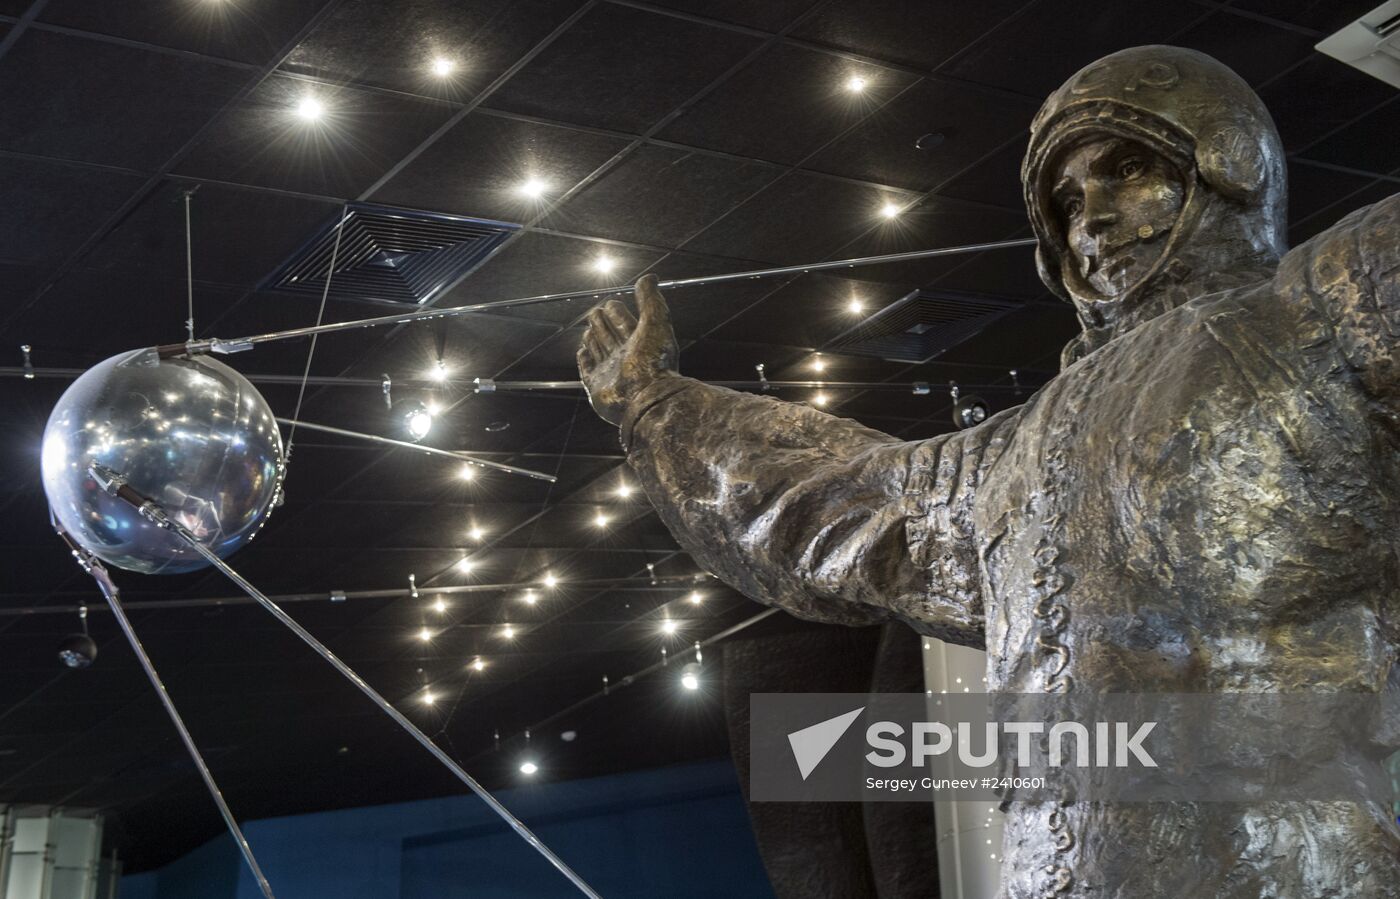 Moscow Memorial Museum of Cosmonautics